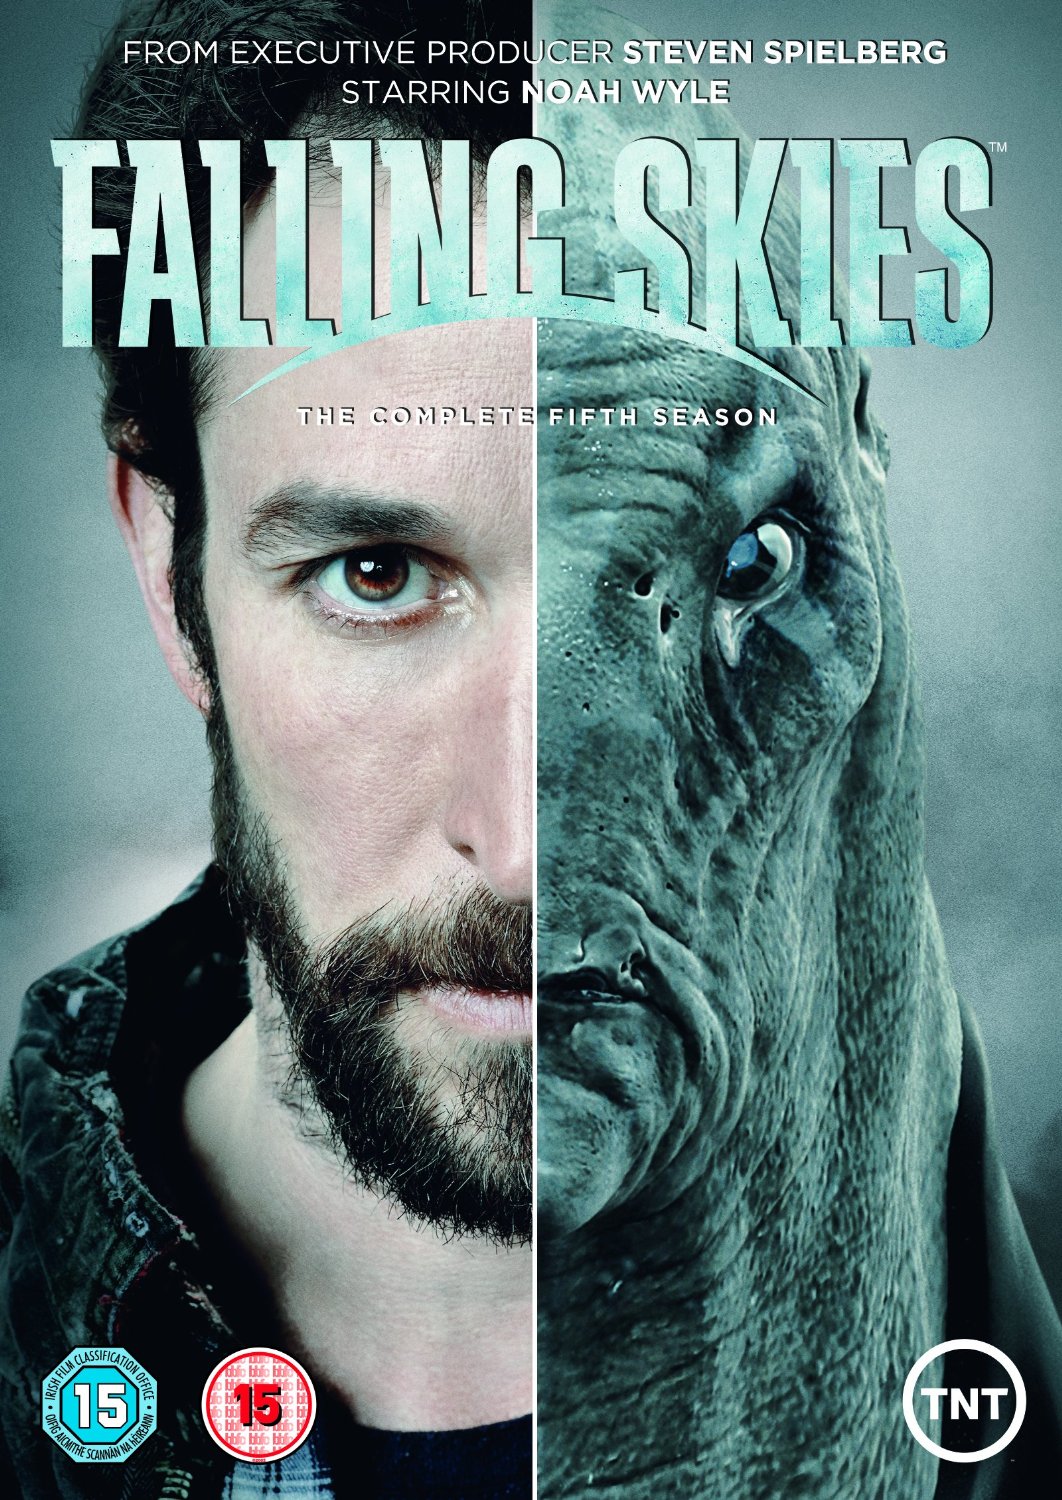 Falling Skies Season 5 DVD review: Earth’s final hour?